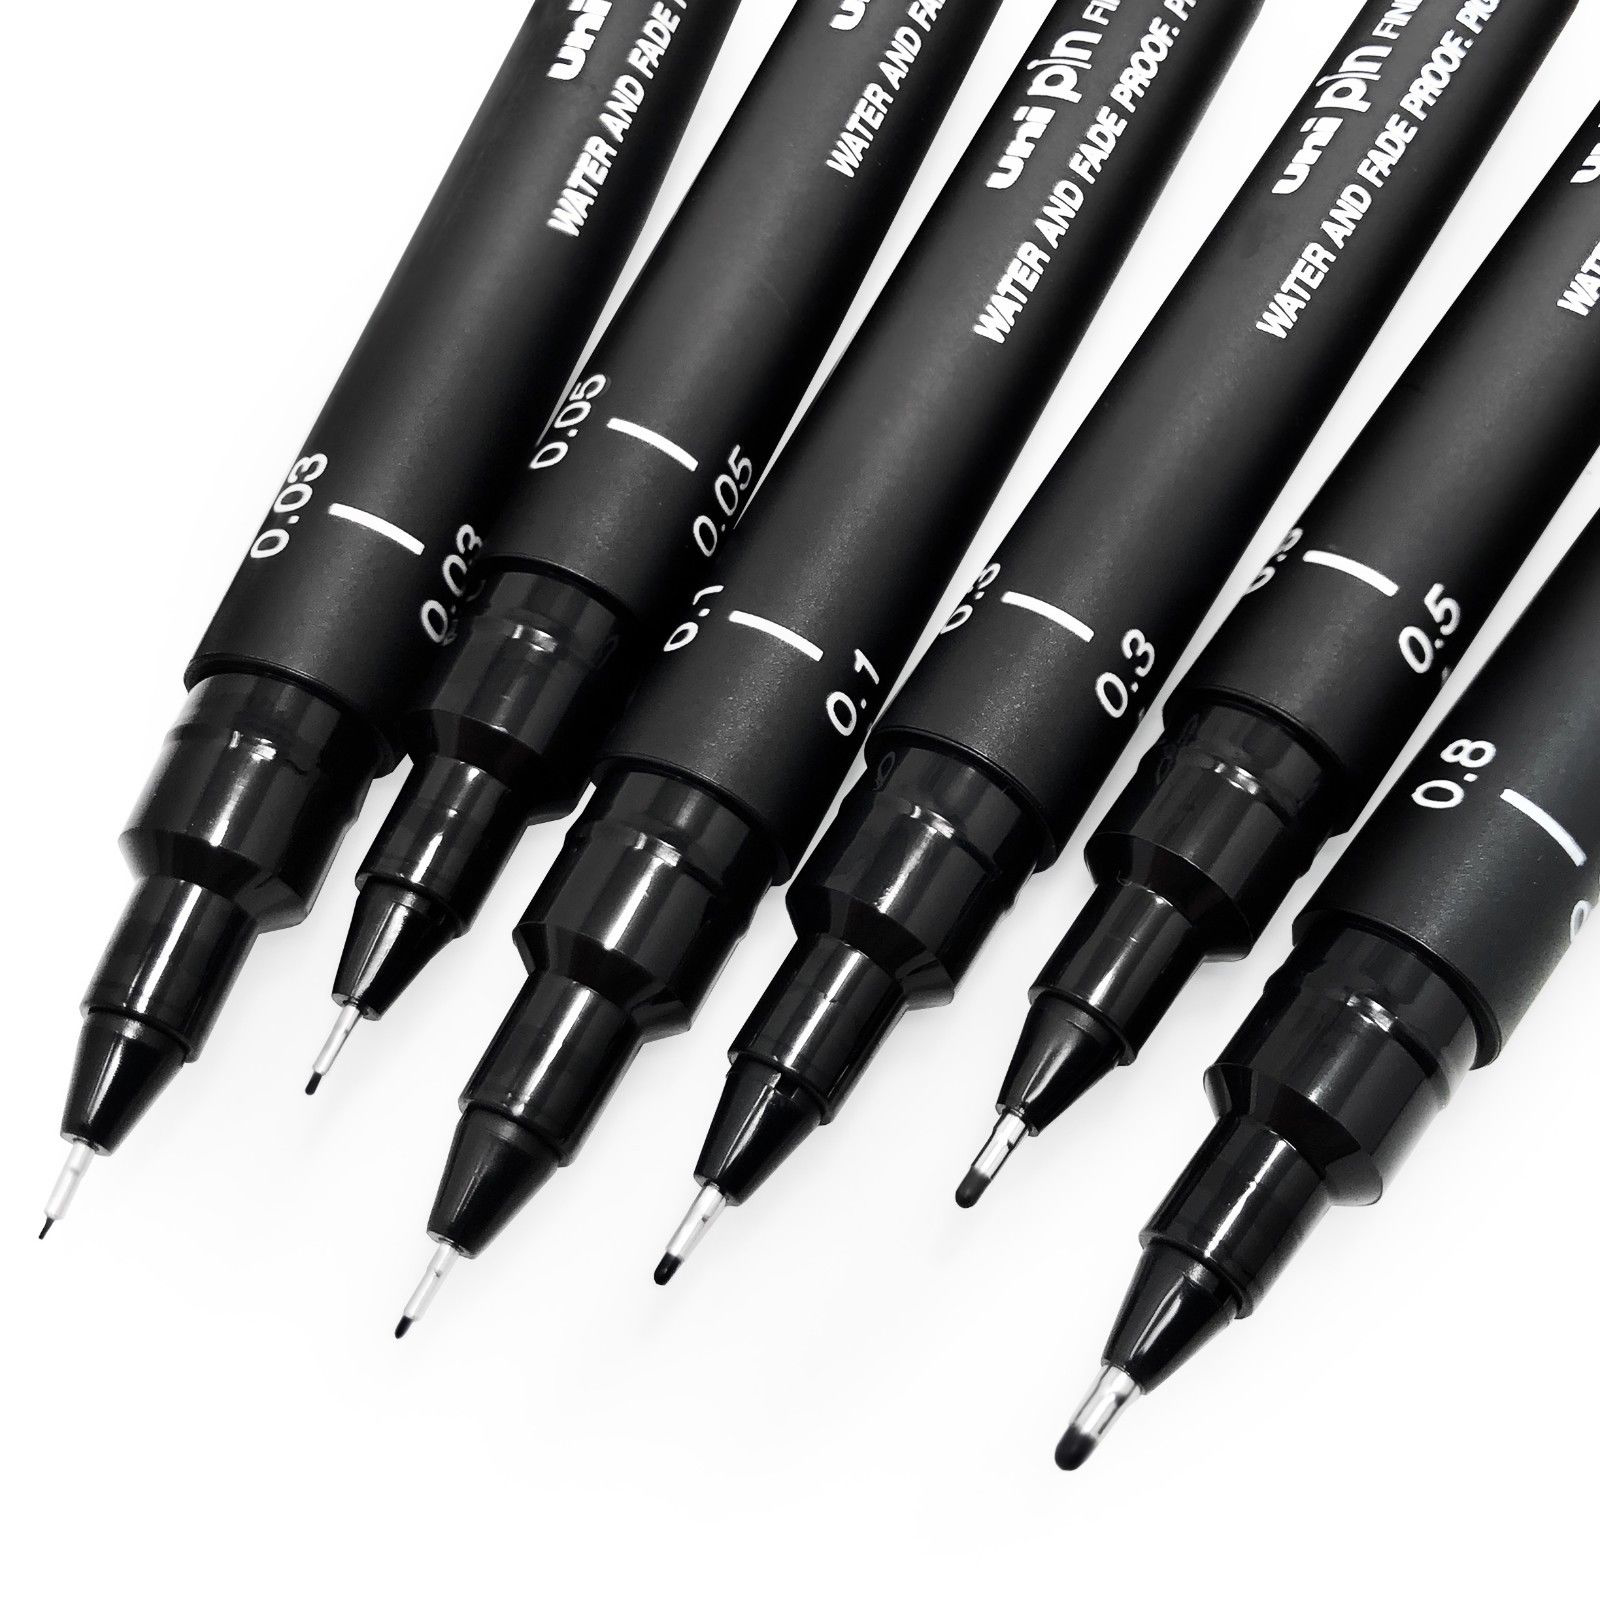 Uni Pin Fineliner Drawing Pen Set of 6